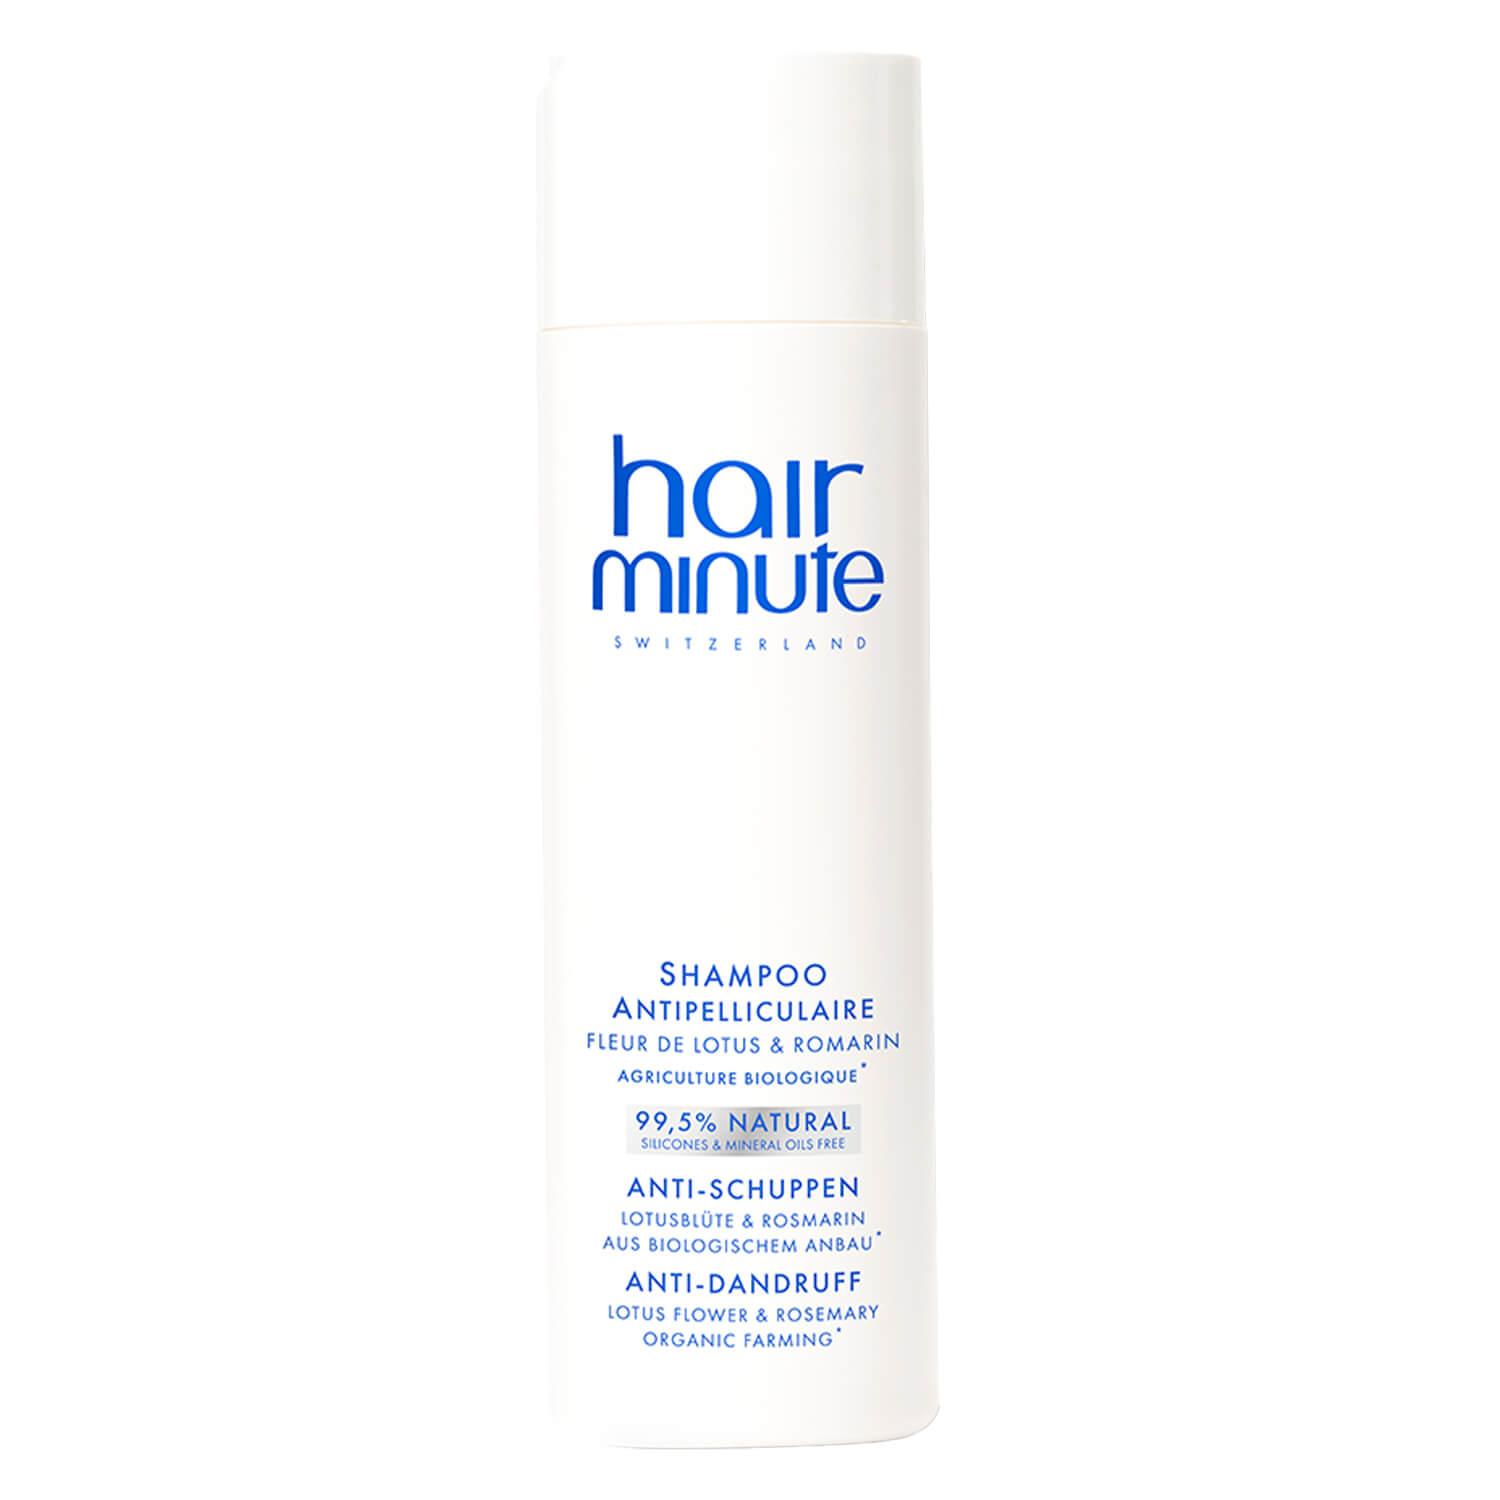 hairminute - Shampoo Antipelliculaire Fleur de Lotus & Romarin 